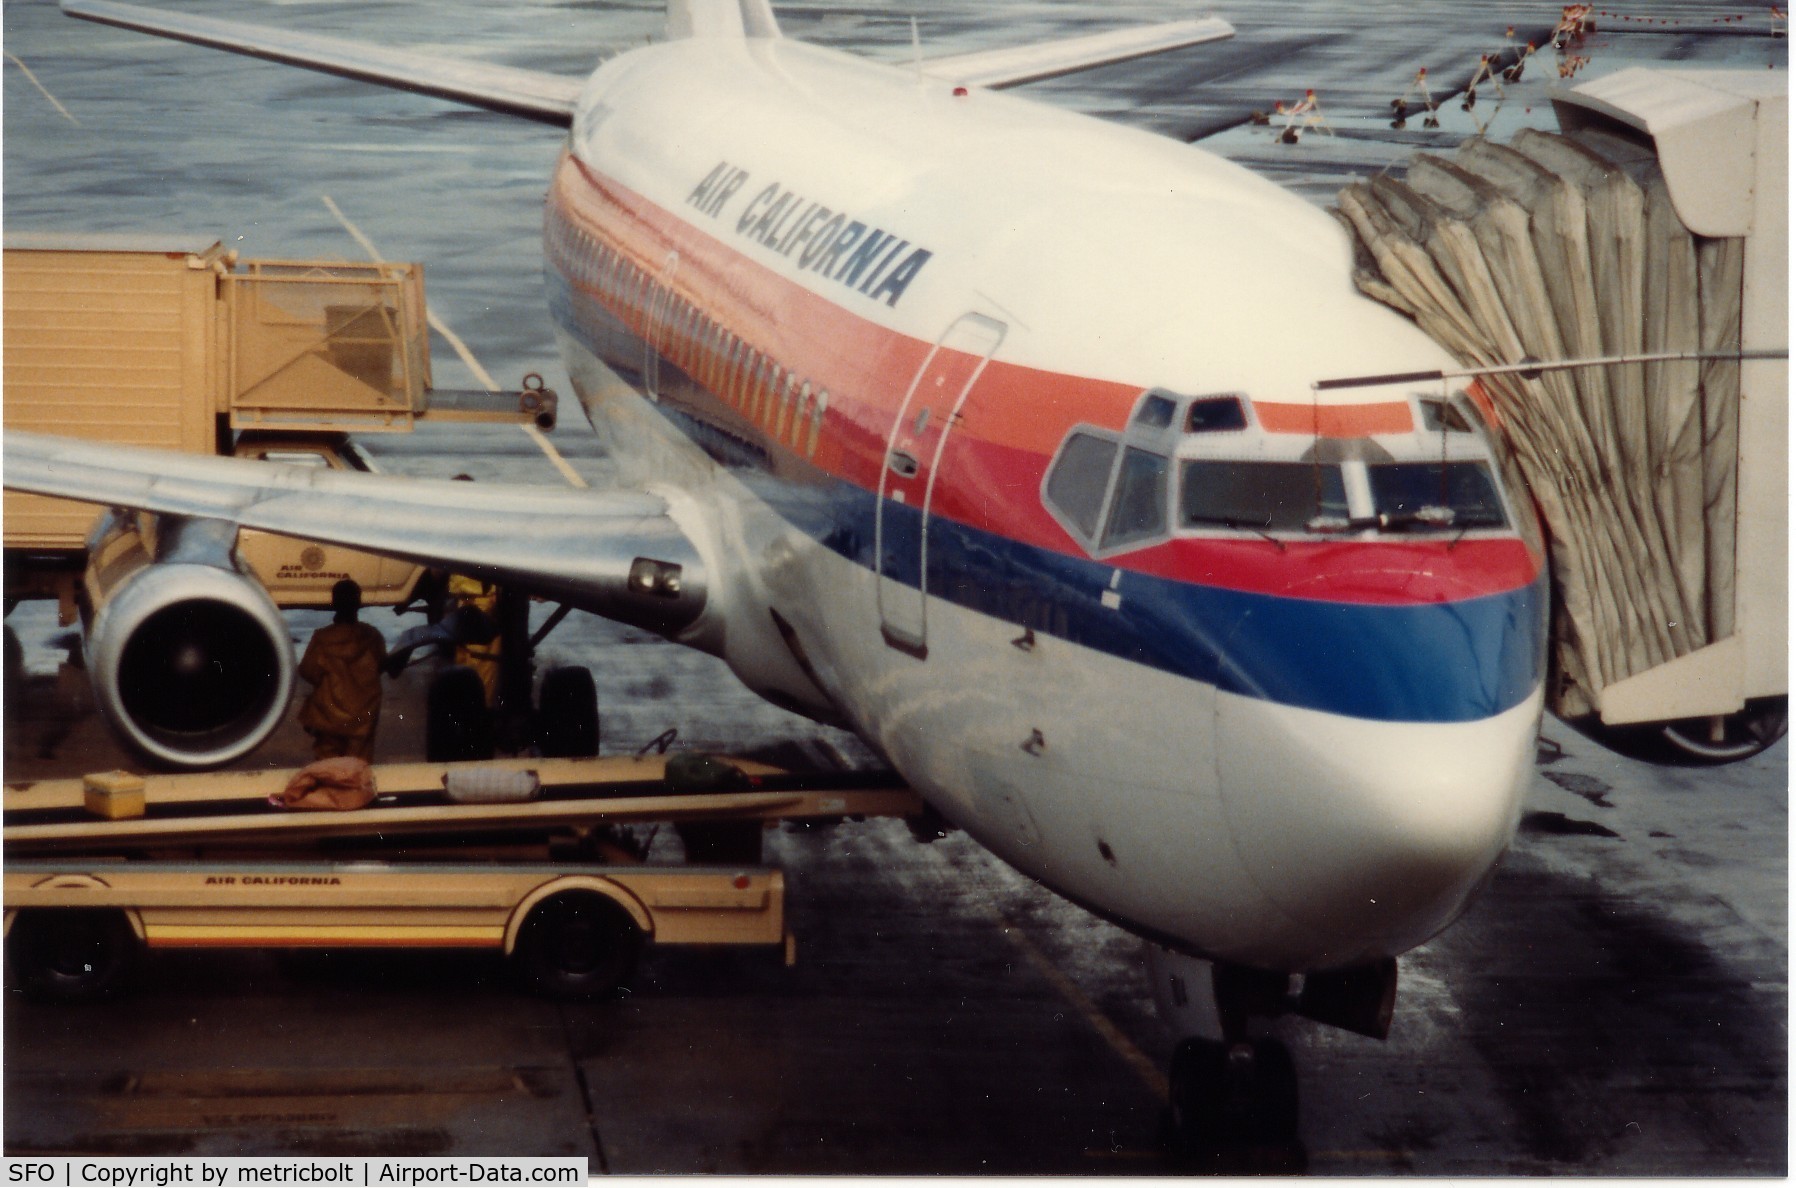 San Francisco International Airport (SFO) - Air California B737 in basic UAL livery,1980s